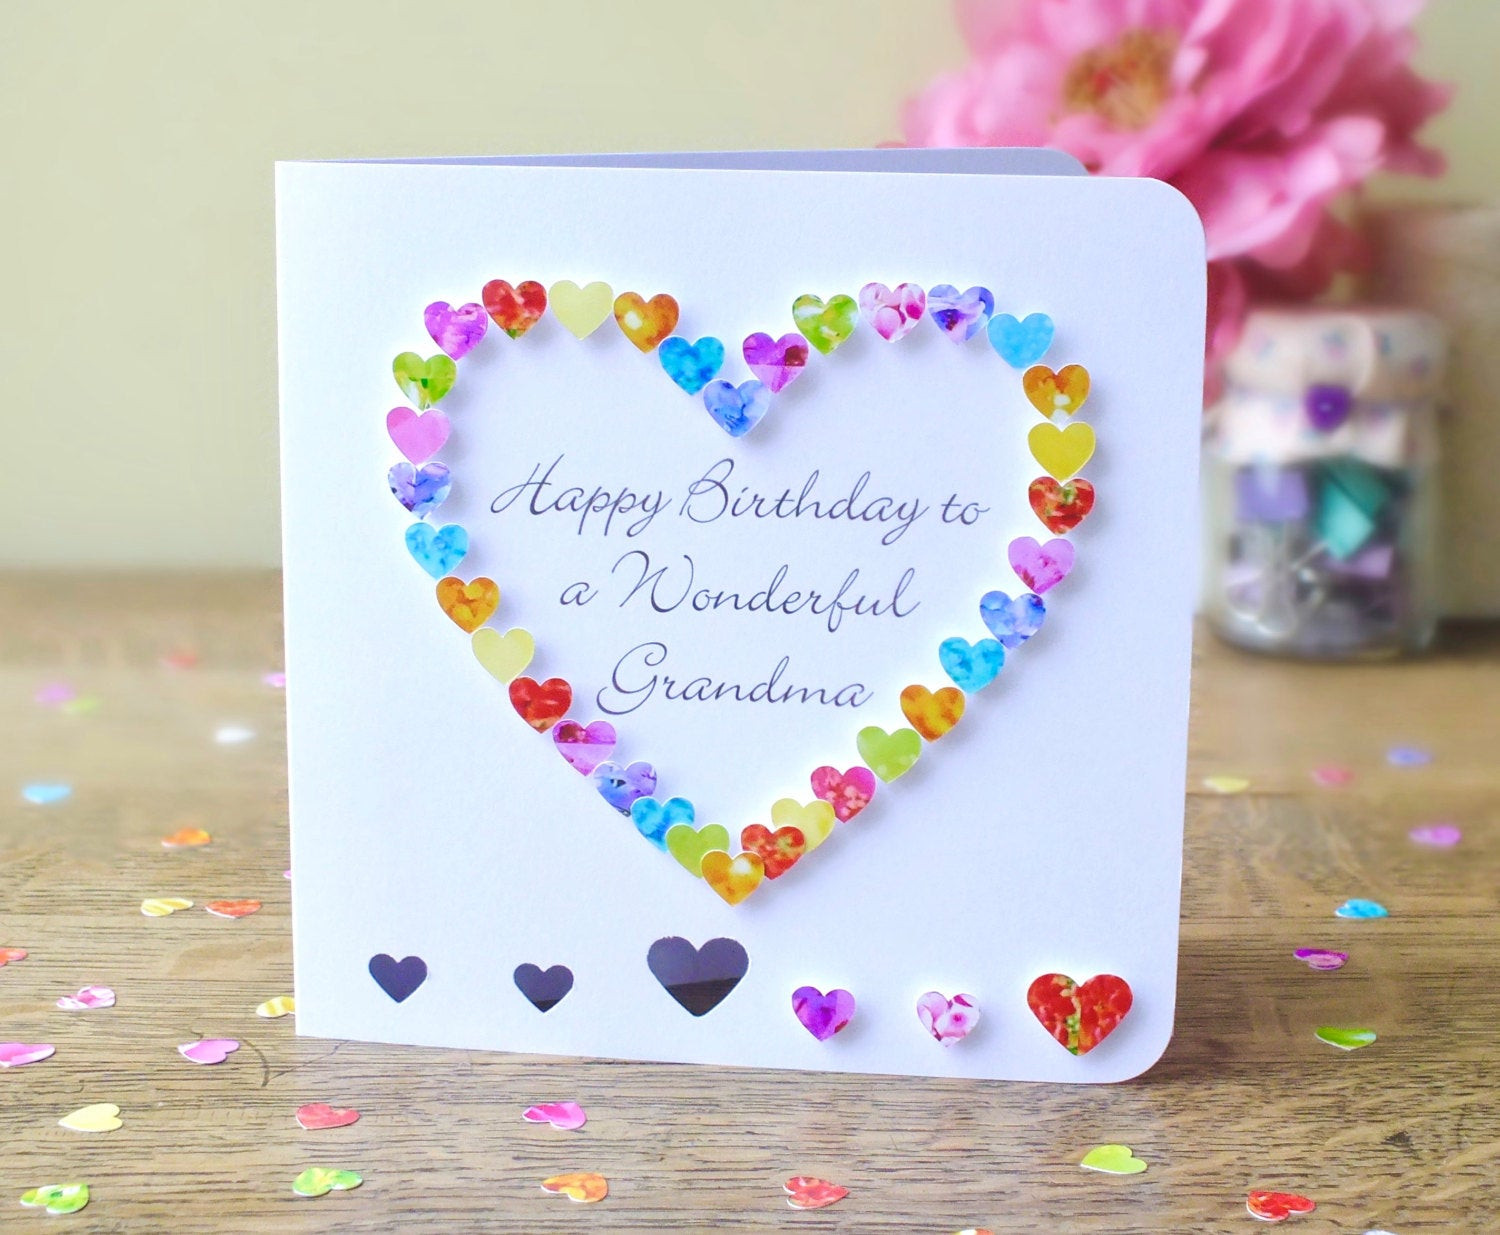 Best ideas about Birthday Card For Grandma
. Save or Pin Grandma Birthday Card Handmade Personalised Birthday Card Now.